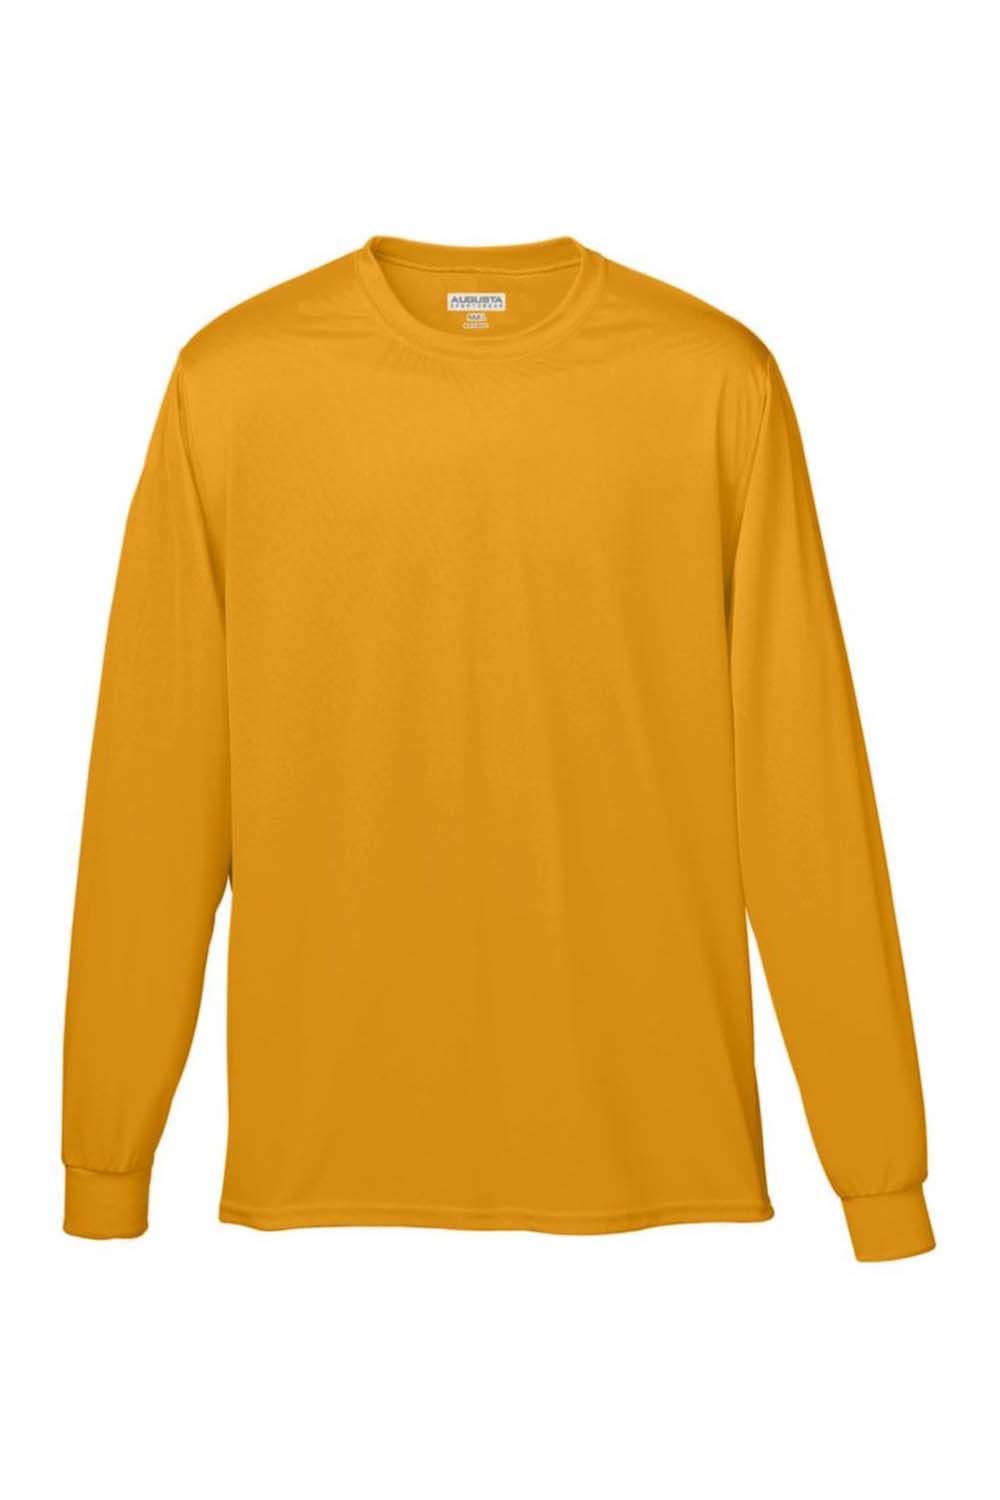 Augusta Sportswear 788 Mens Moisture Wicking Long Sleeve Crewneck T-Shirt Gold Model Flat Front